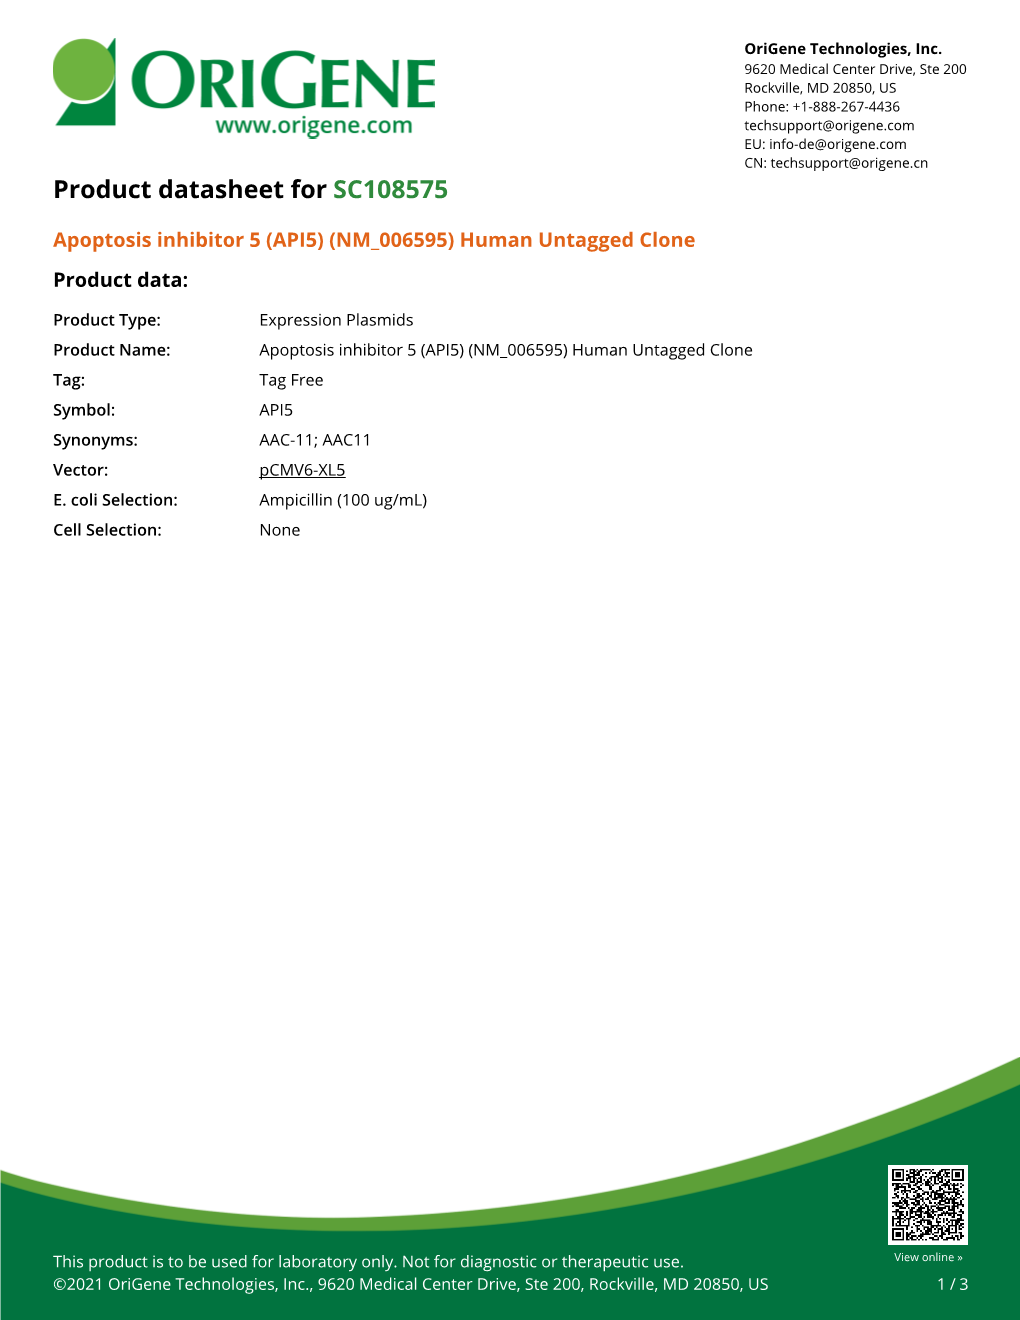 Apoptosis Inhibitor 5 (API5) (NM 006595) Human Untagged Clone Product Data